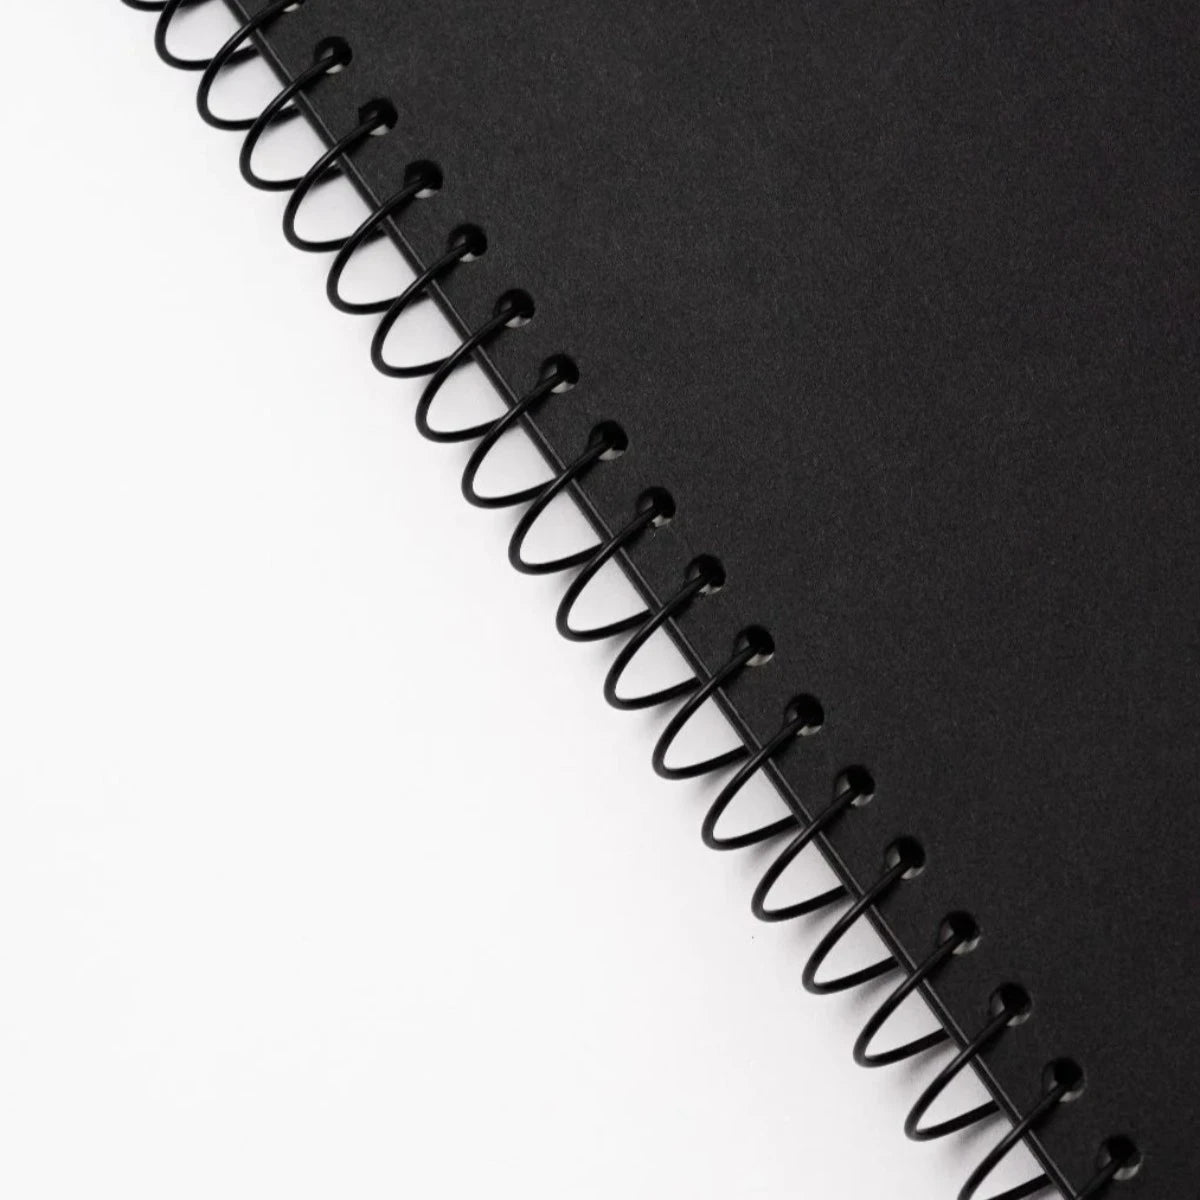 Blackwing Spiral Notebook